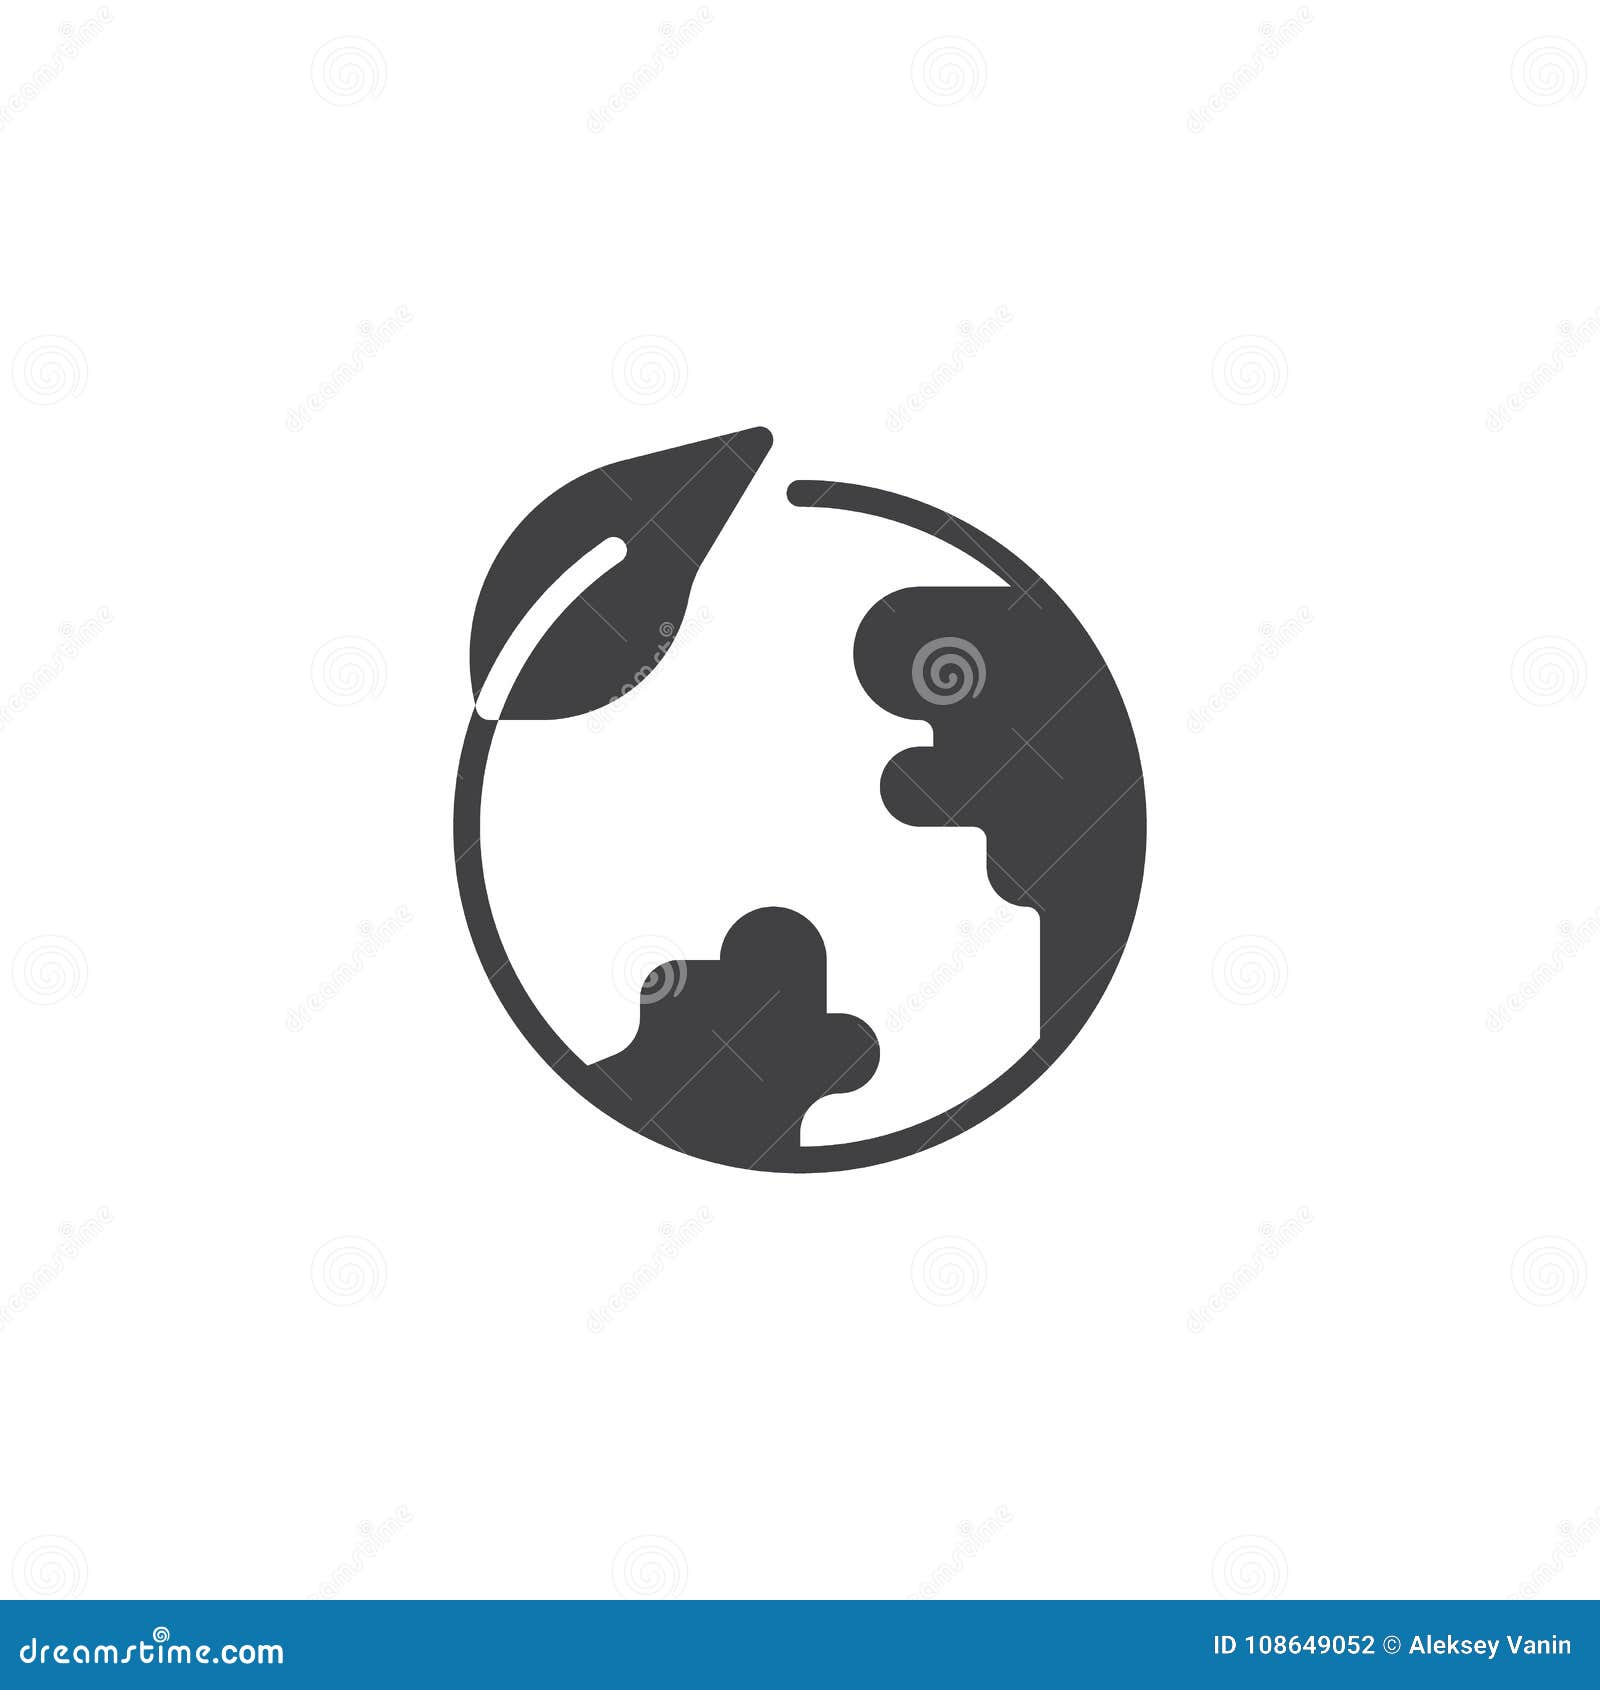 Eco globe icon vector stock vector. Illustration of leaf - 108649052